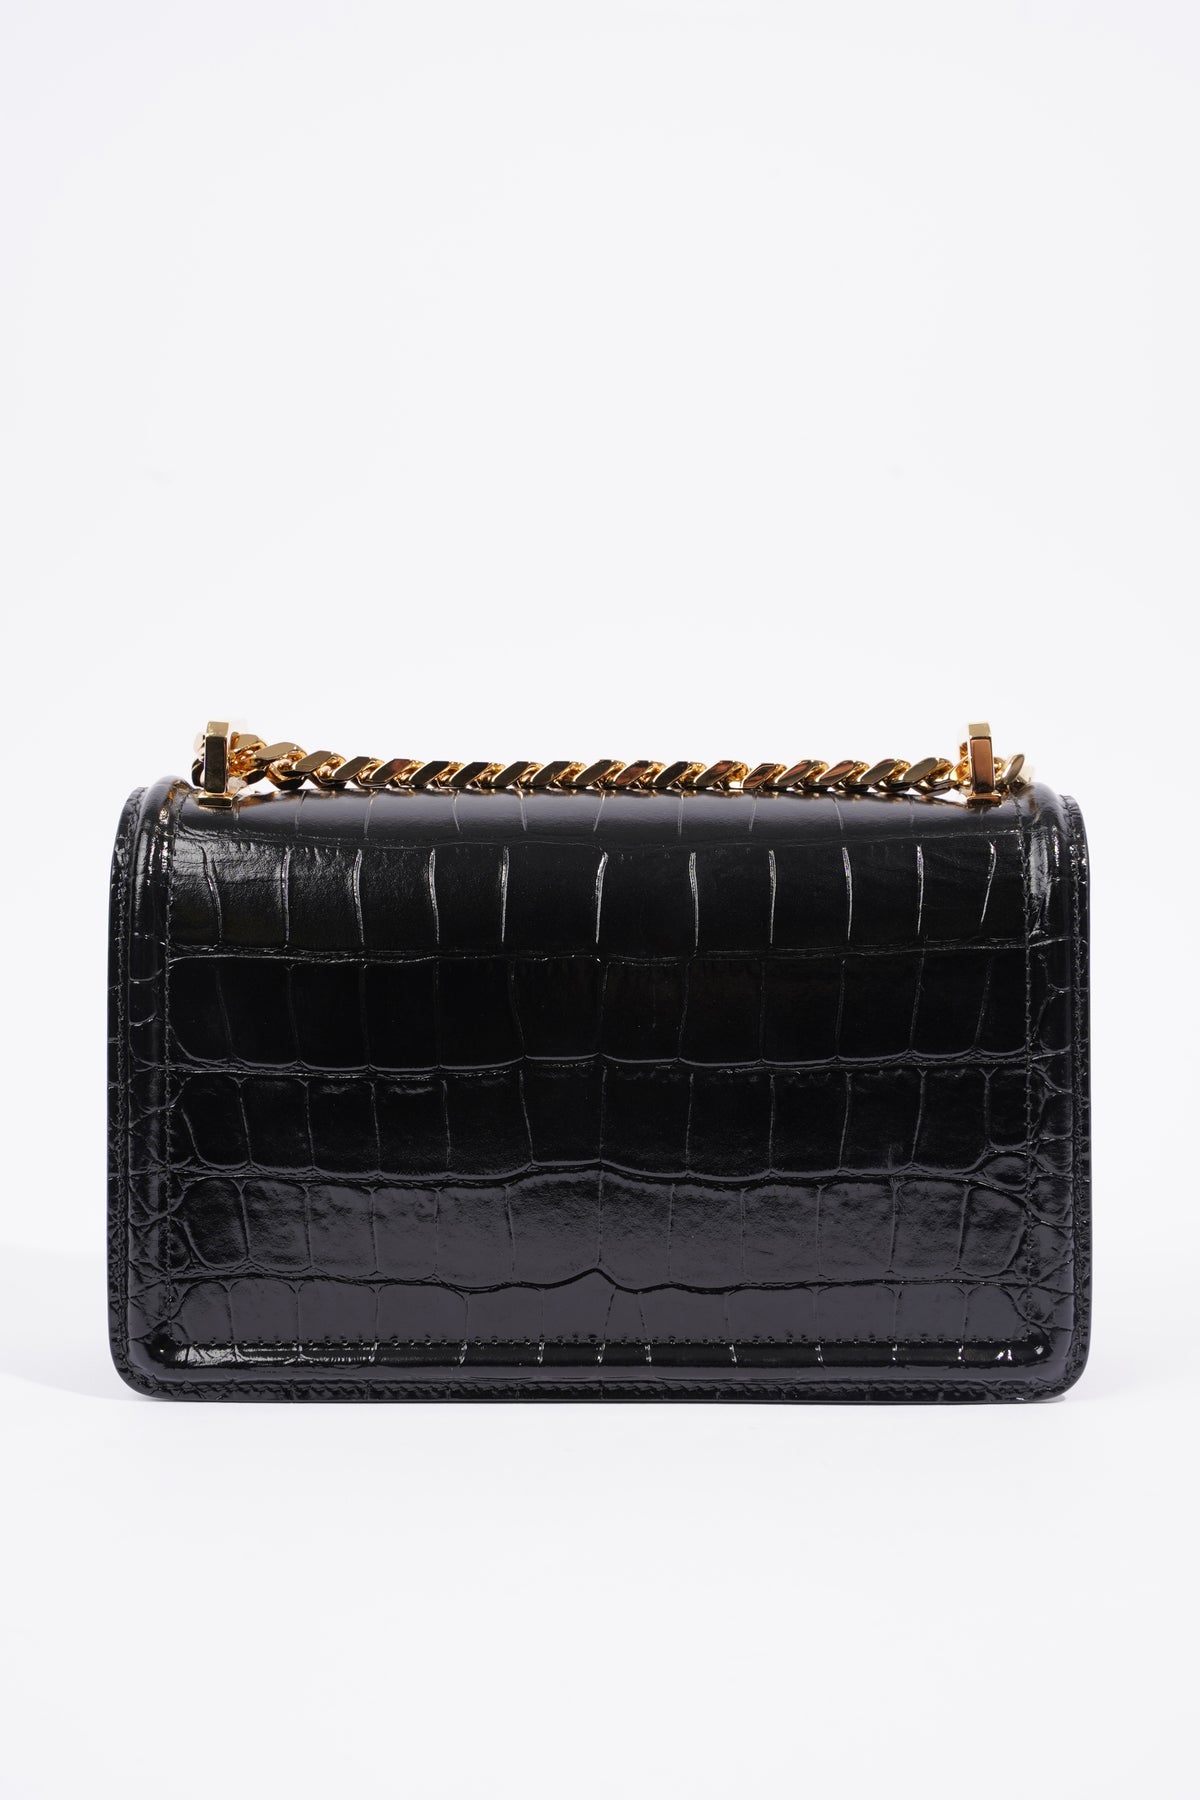 Tb bag leather handbag Burberry Black in Leather - 29610463